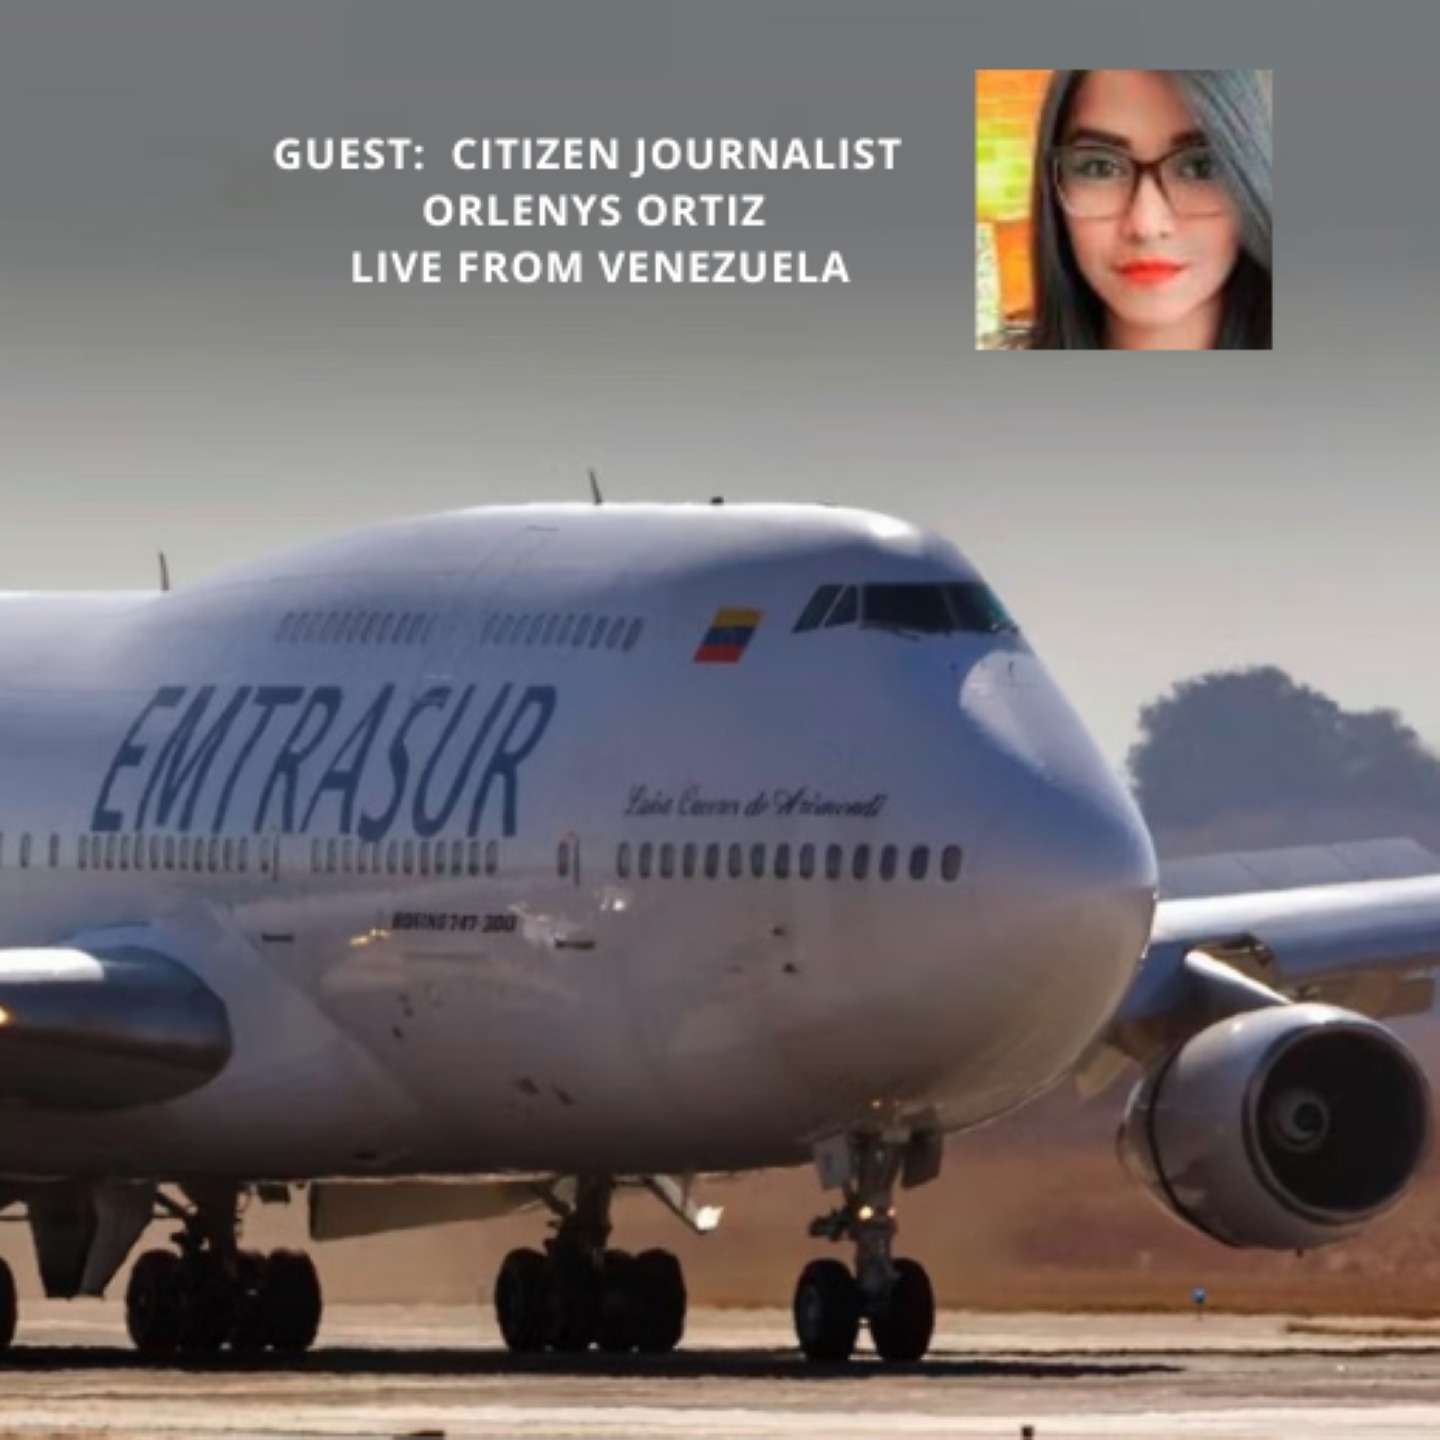 Whatever Happened to that Plane?  U.S. Unilateral Sanctions & the Saga of Venezuela's Emtrasur Cargo 747